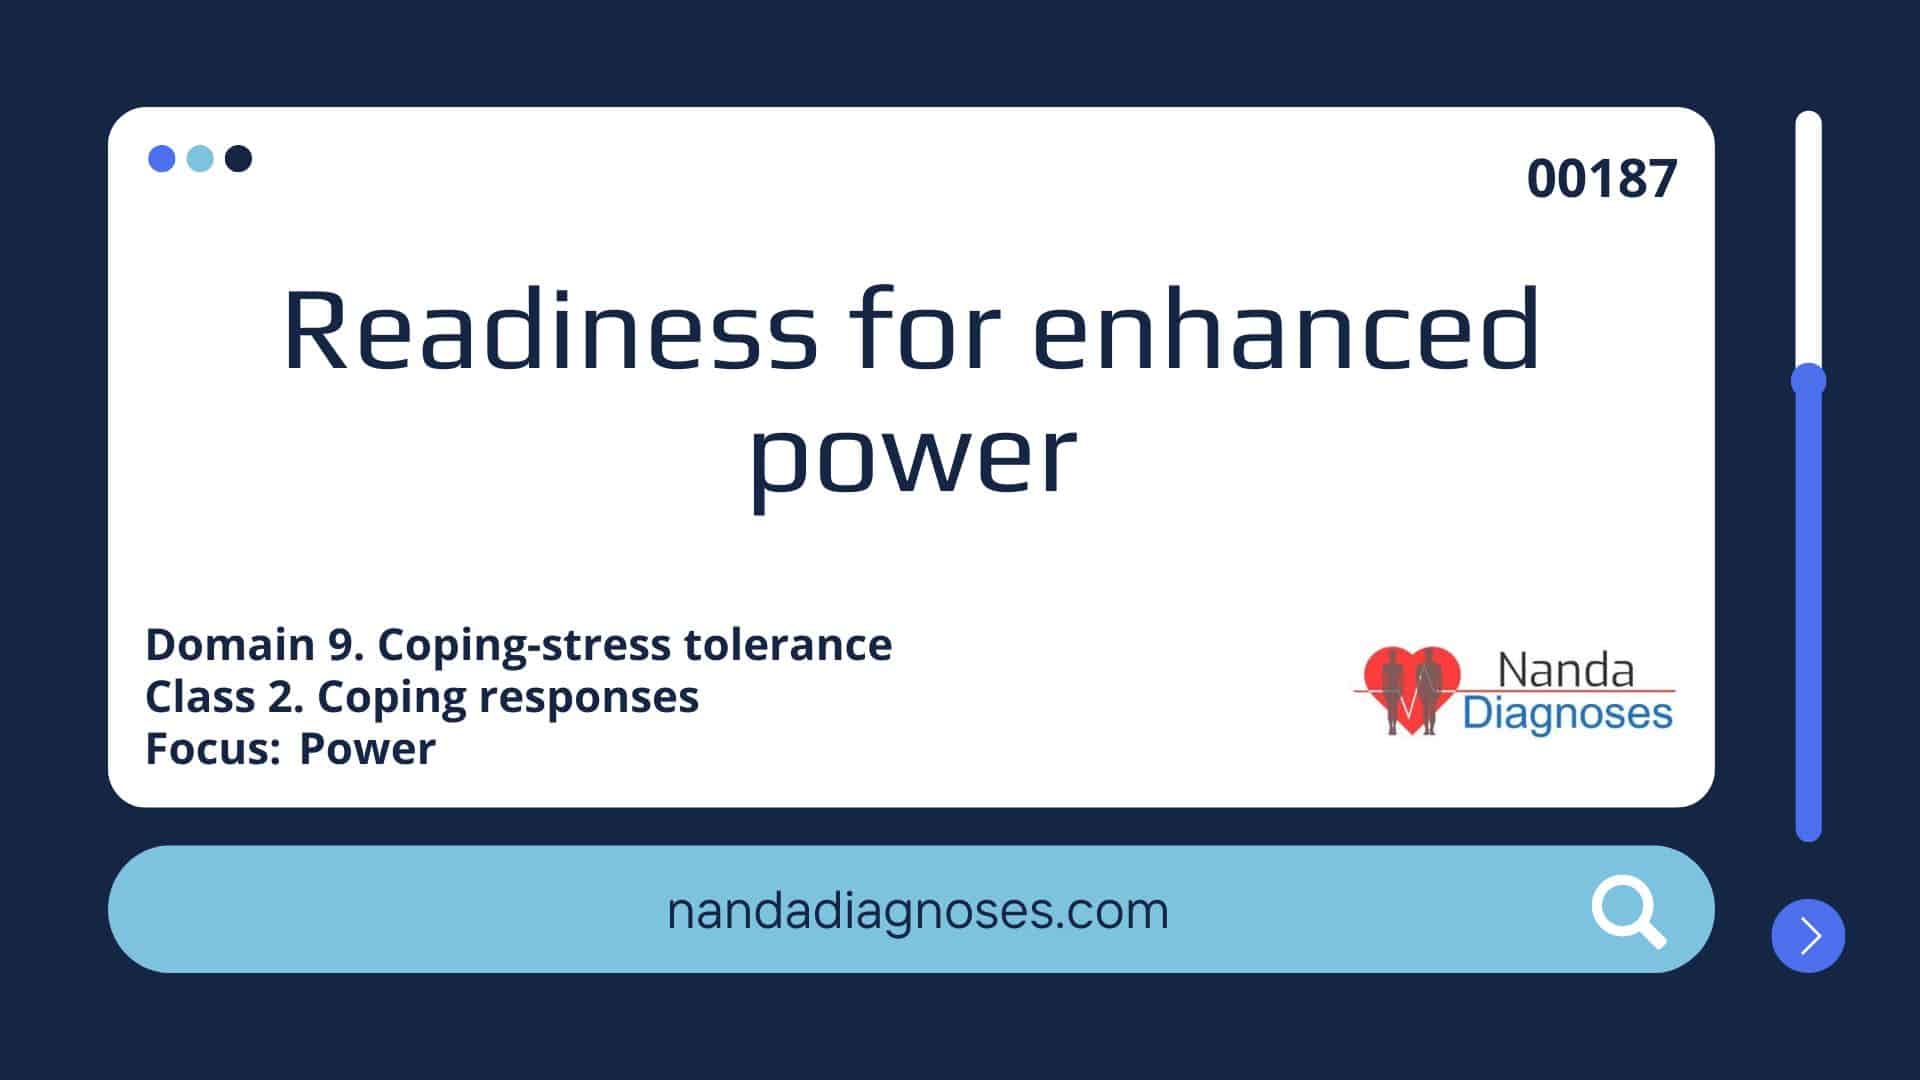 Nursing diagnosis Readiness for enhanced power